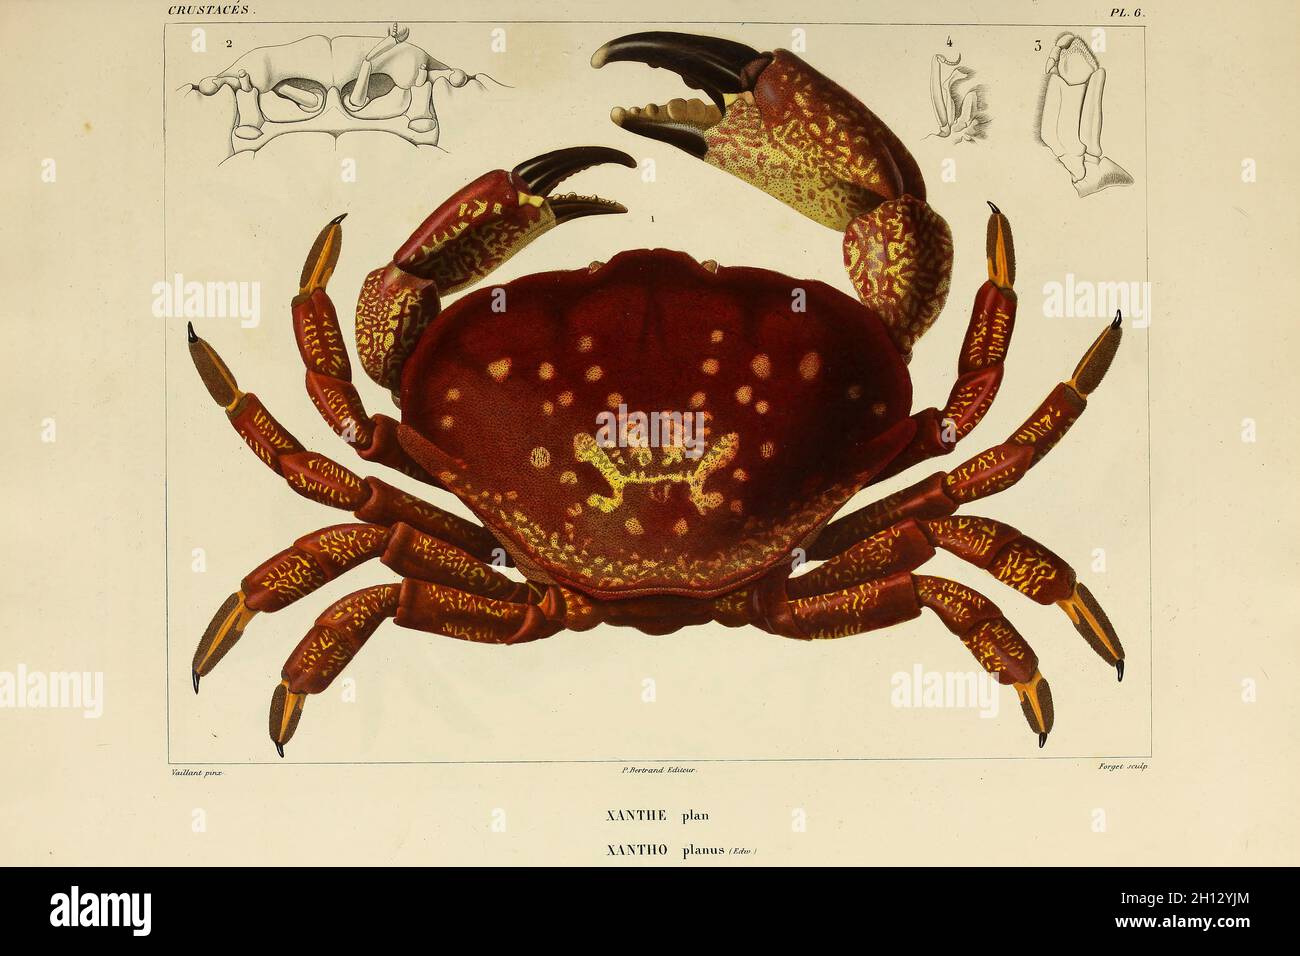 Xantho crabs, 19th century illustration Stock Photo